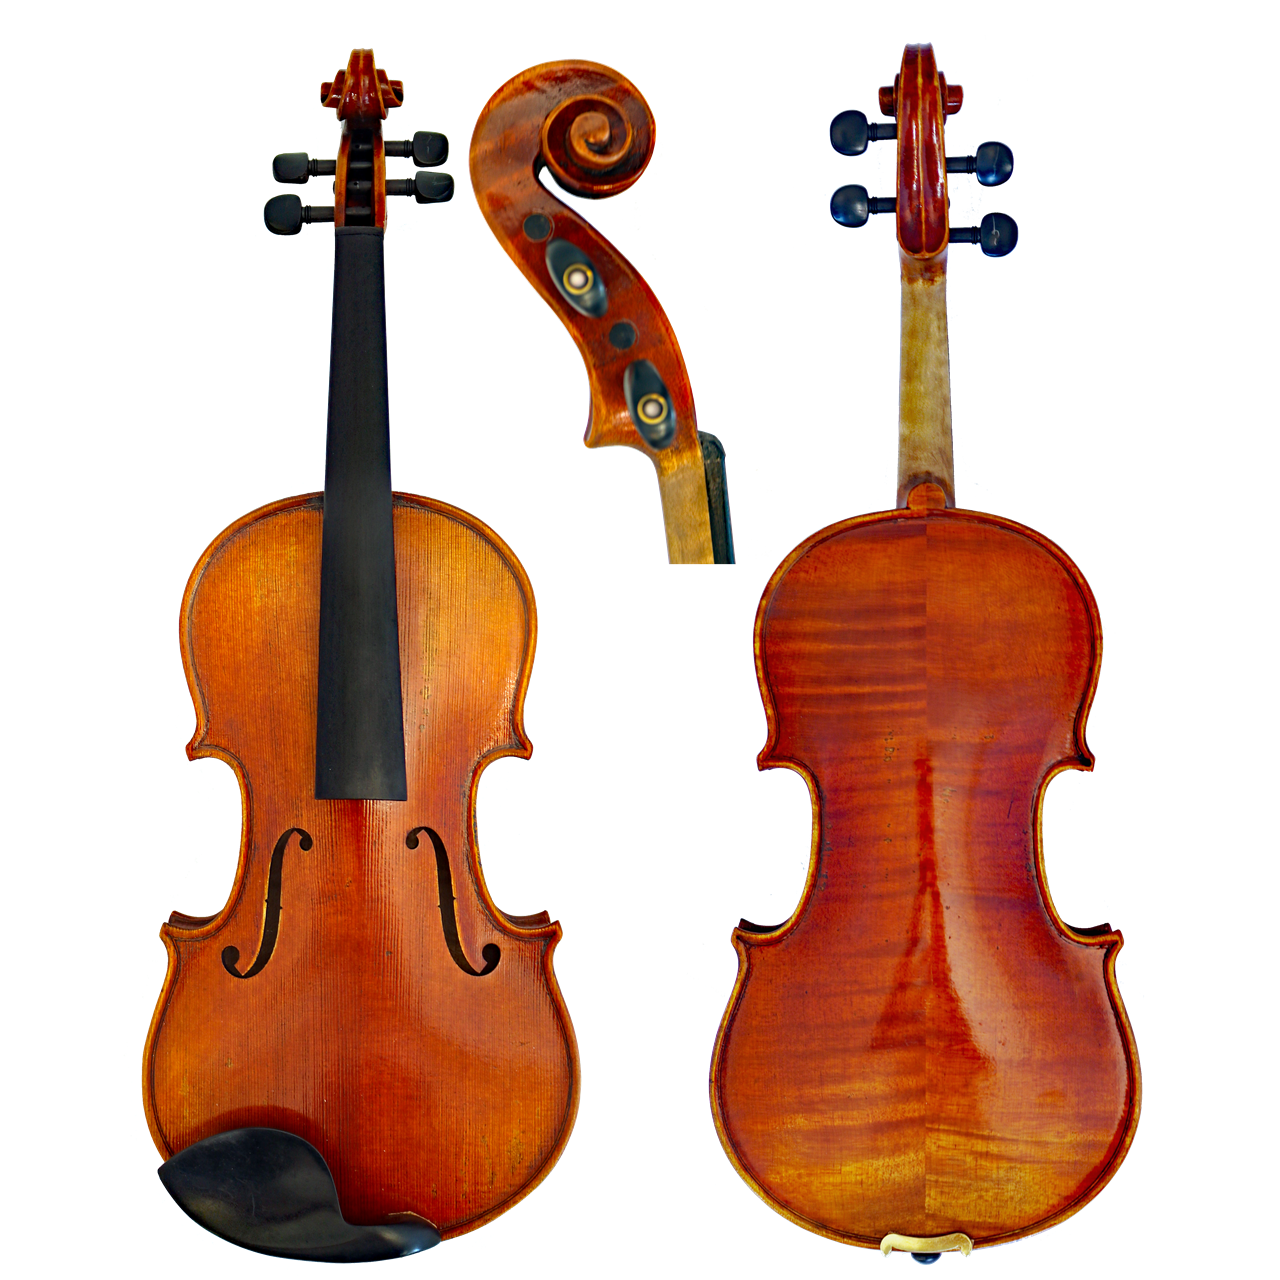 SE Violine Vieille France 3/4